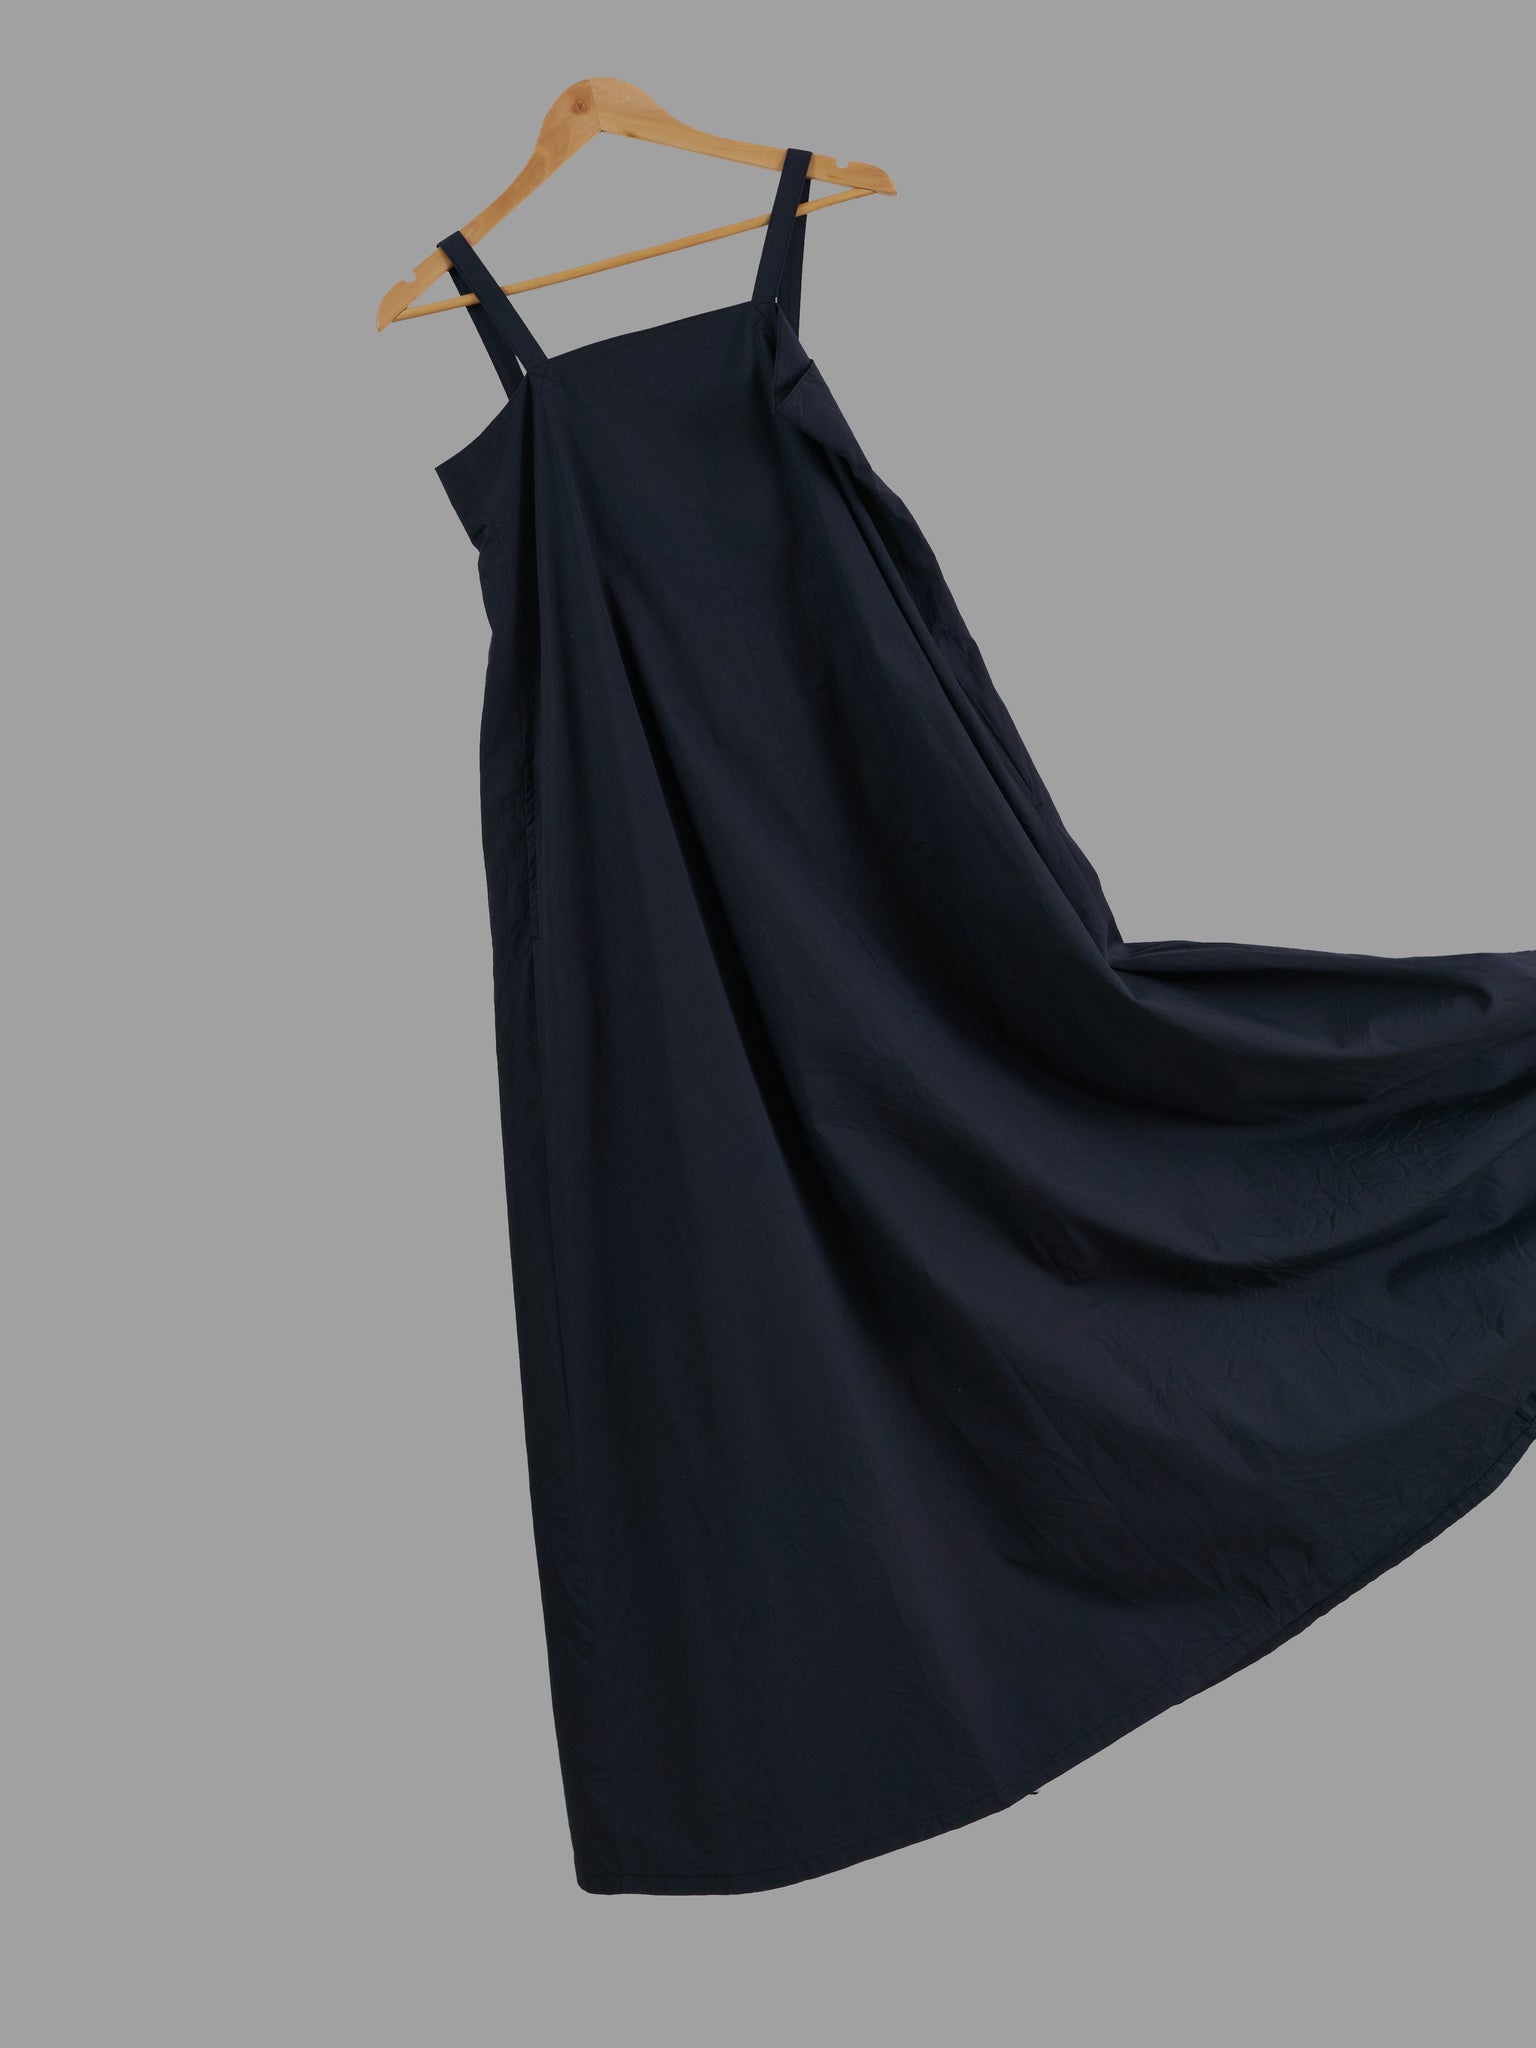 Y's Yohji Yamamoto dark grey cotton silk flared pinafore dress - JP 3 approx M